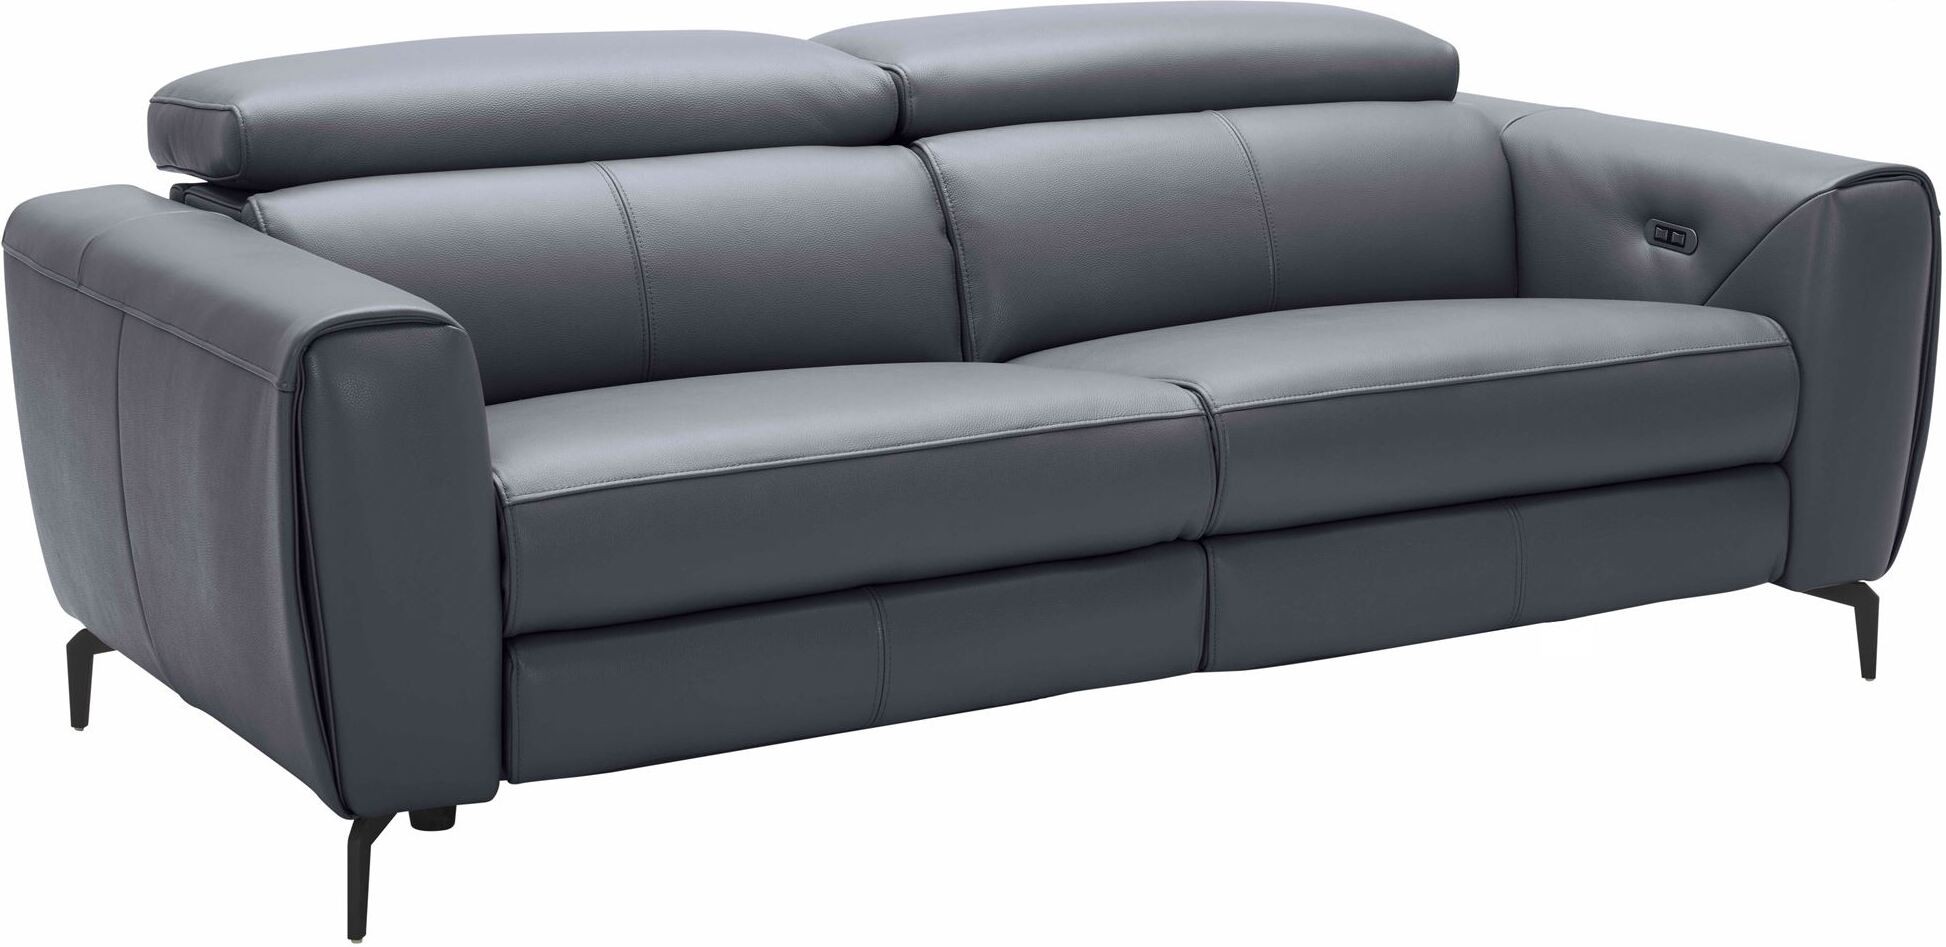 lorenzo gray leather sofa bed